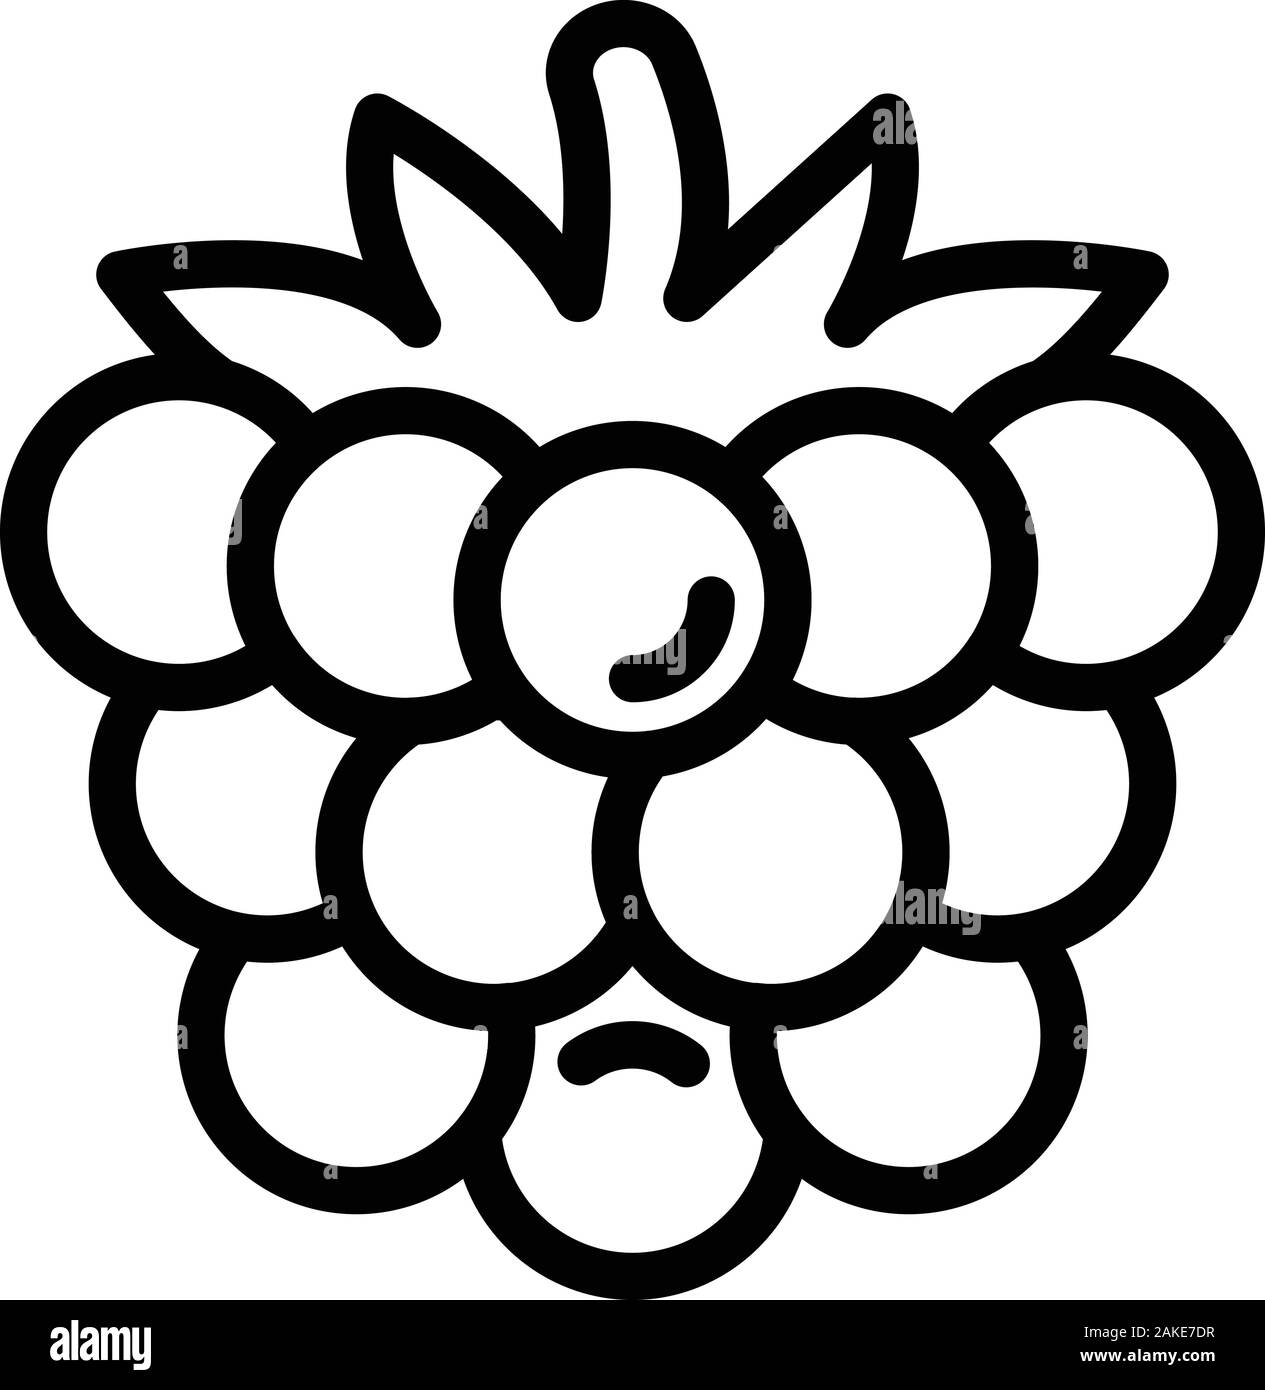 Reif Symbol Blackberry, outline Style Stock-Vektorgrafik - Alamy